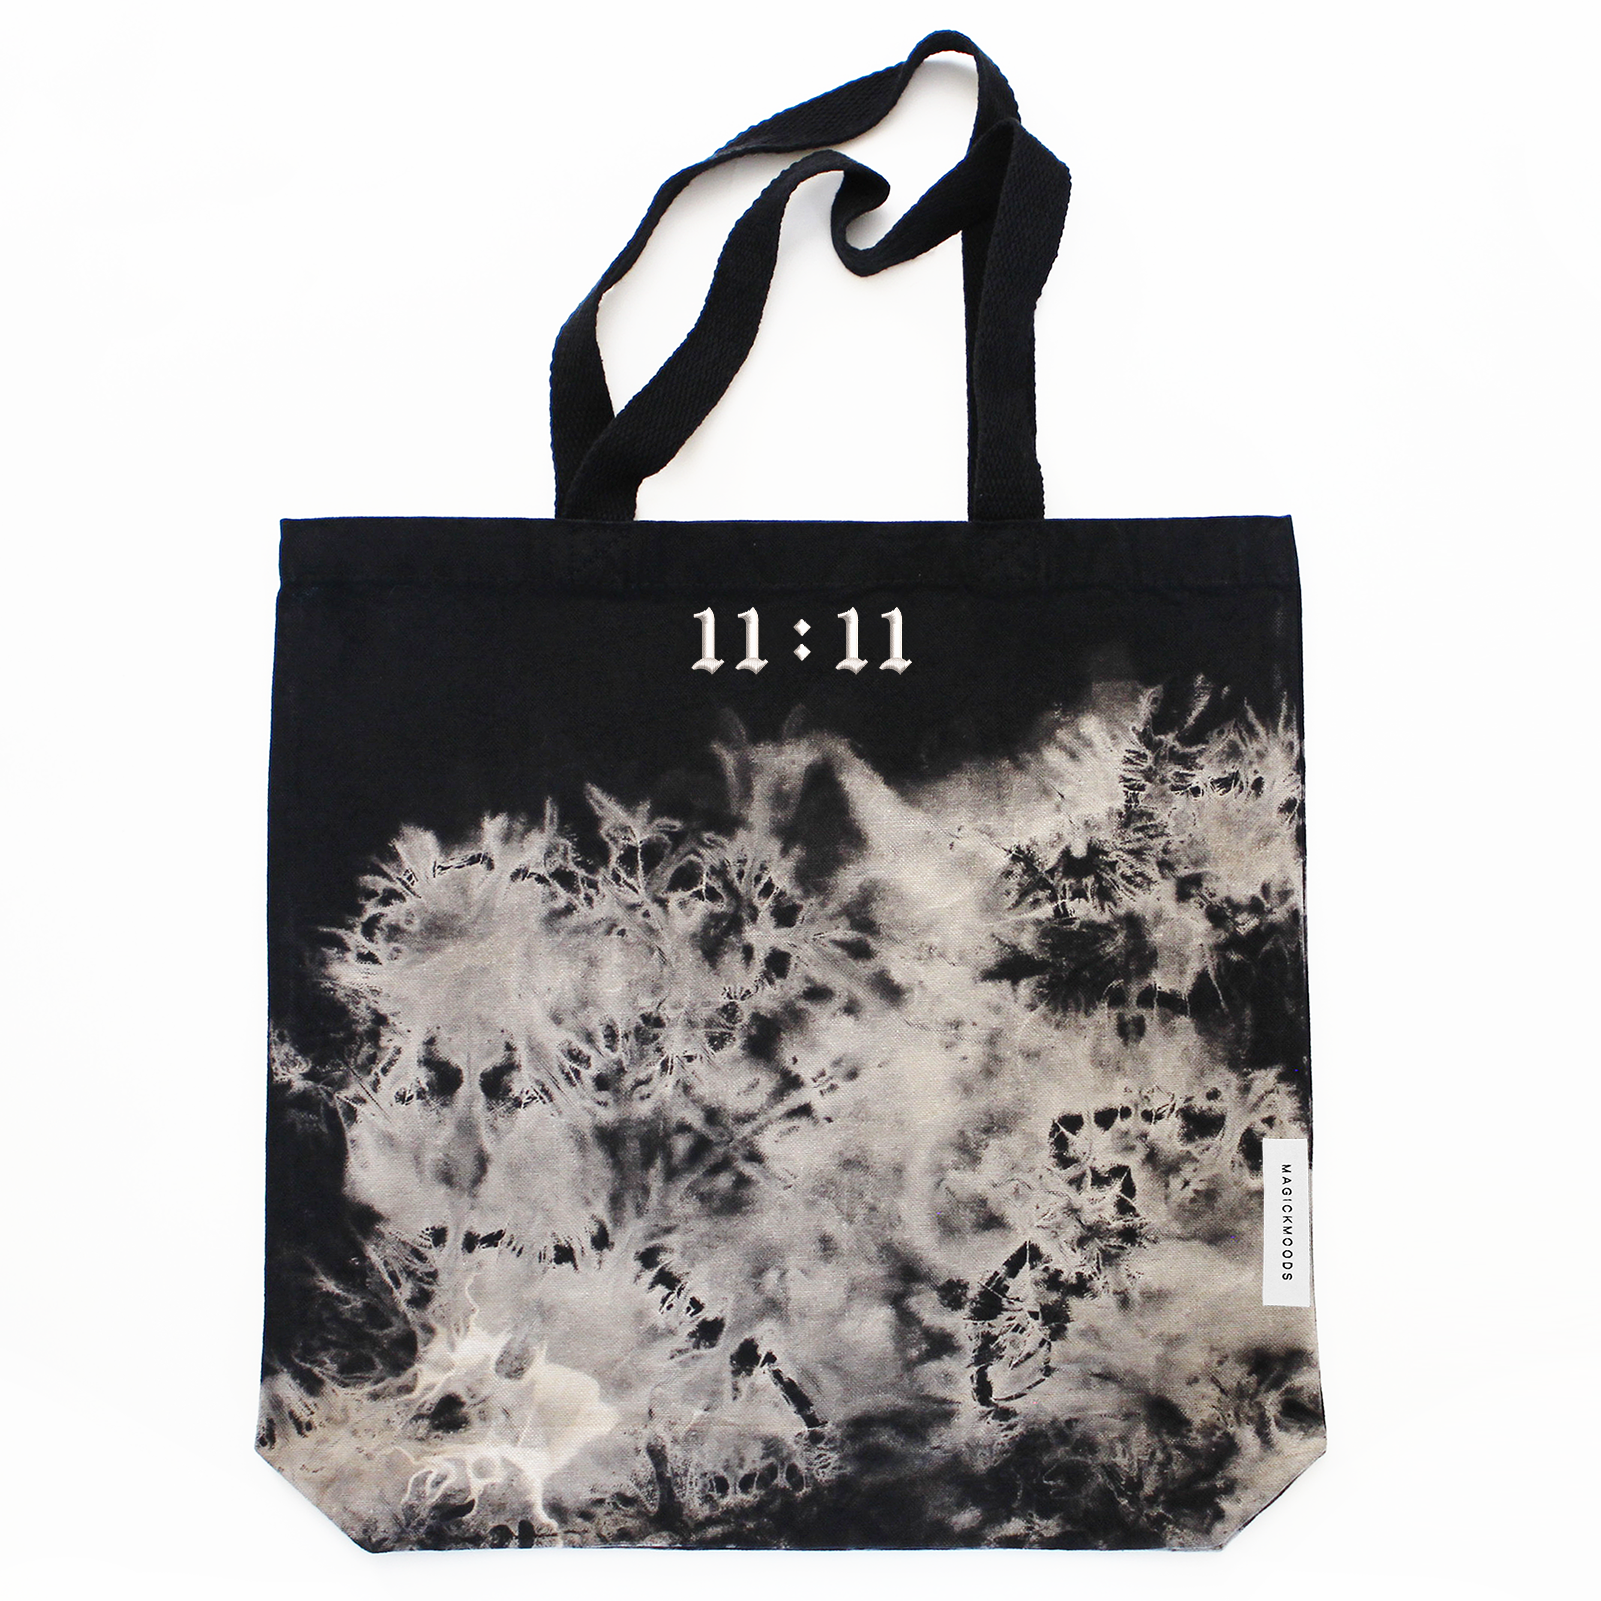 11:11 Acid Washed Canvas Tote Bag